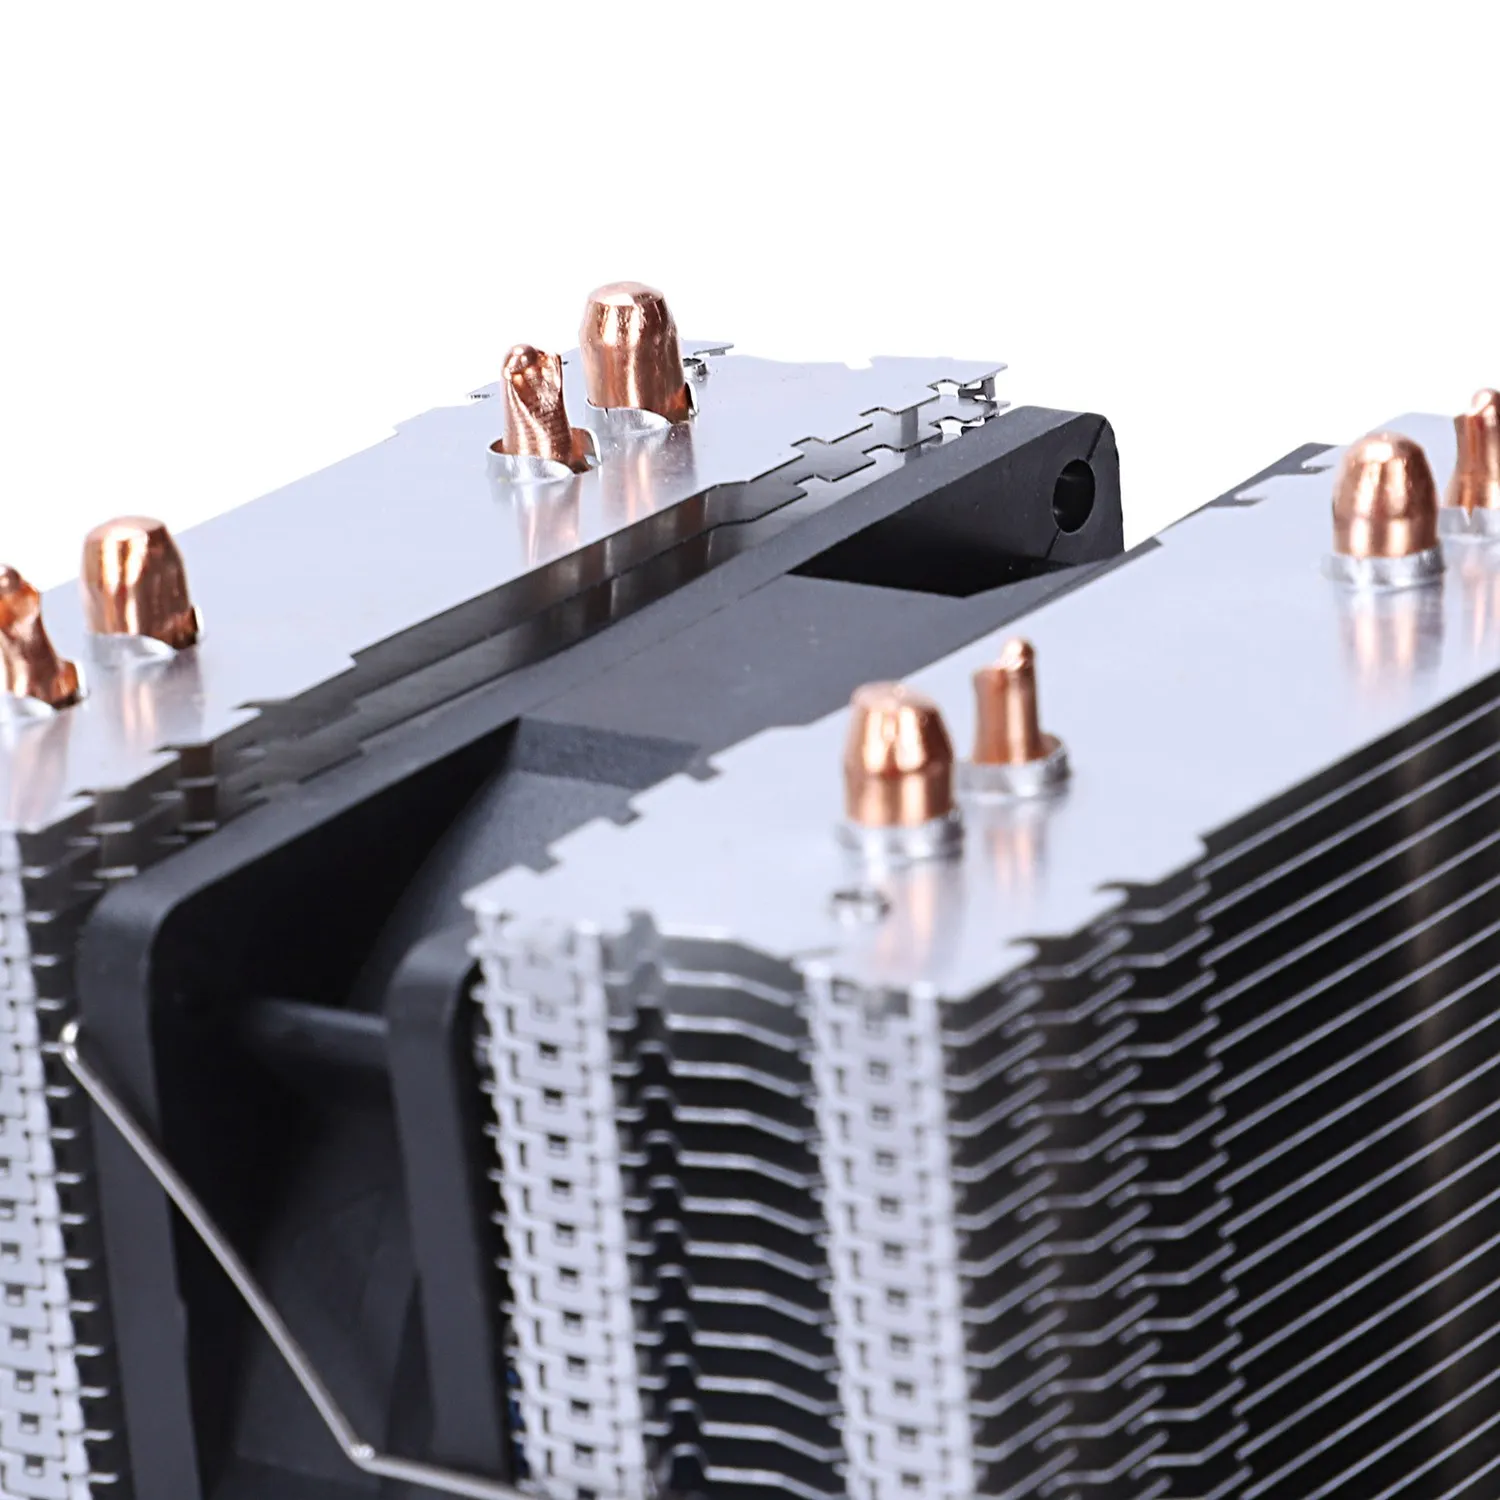 Lanshuo 4 тепловая труба 4 провода со светом один вентилятор процессор вентилятор радиатора кулер радиатор для Intel Lga 1155/1156/1366 кулер Si